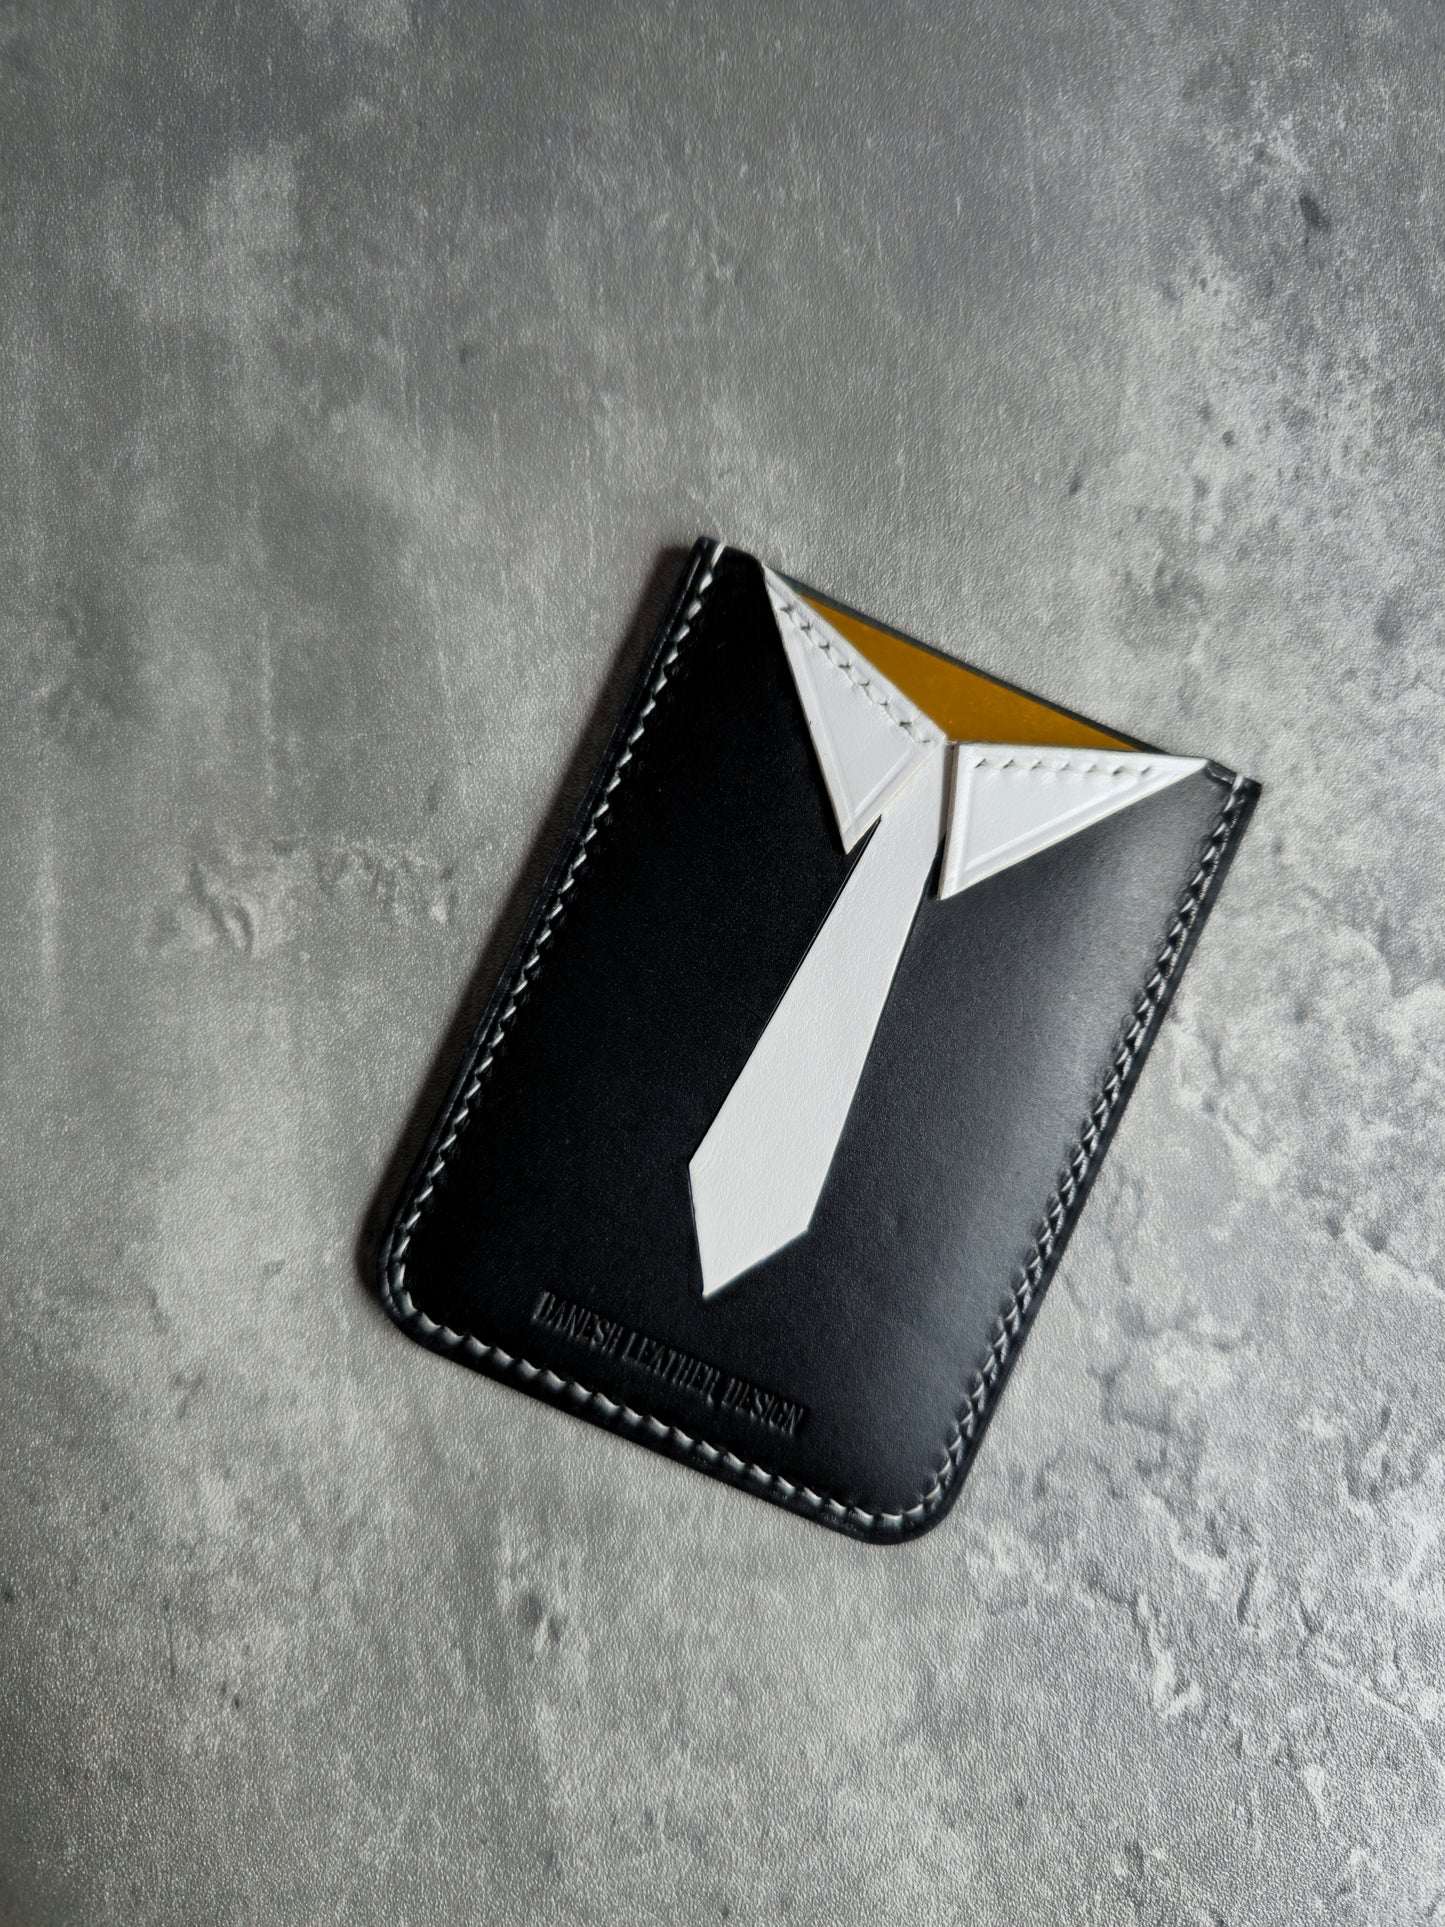 Frakki card holder | DIY | Pattern Pdf | Leather craft template